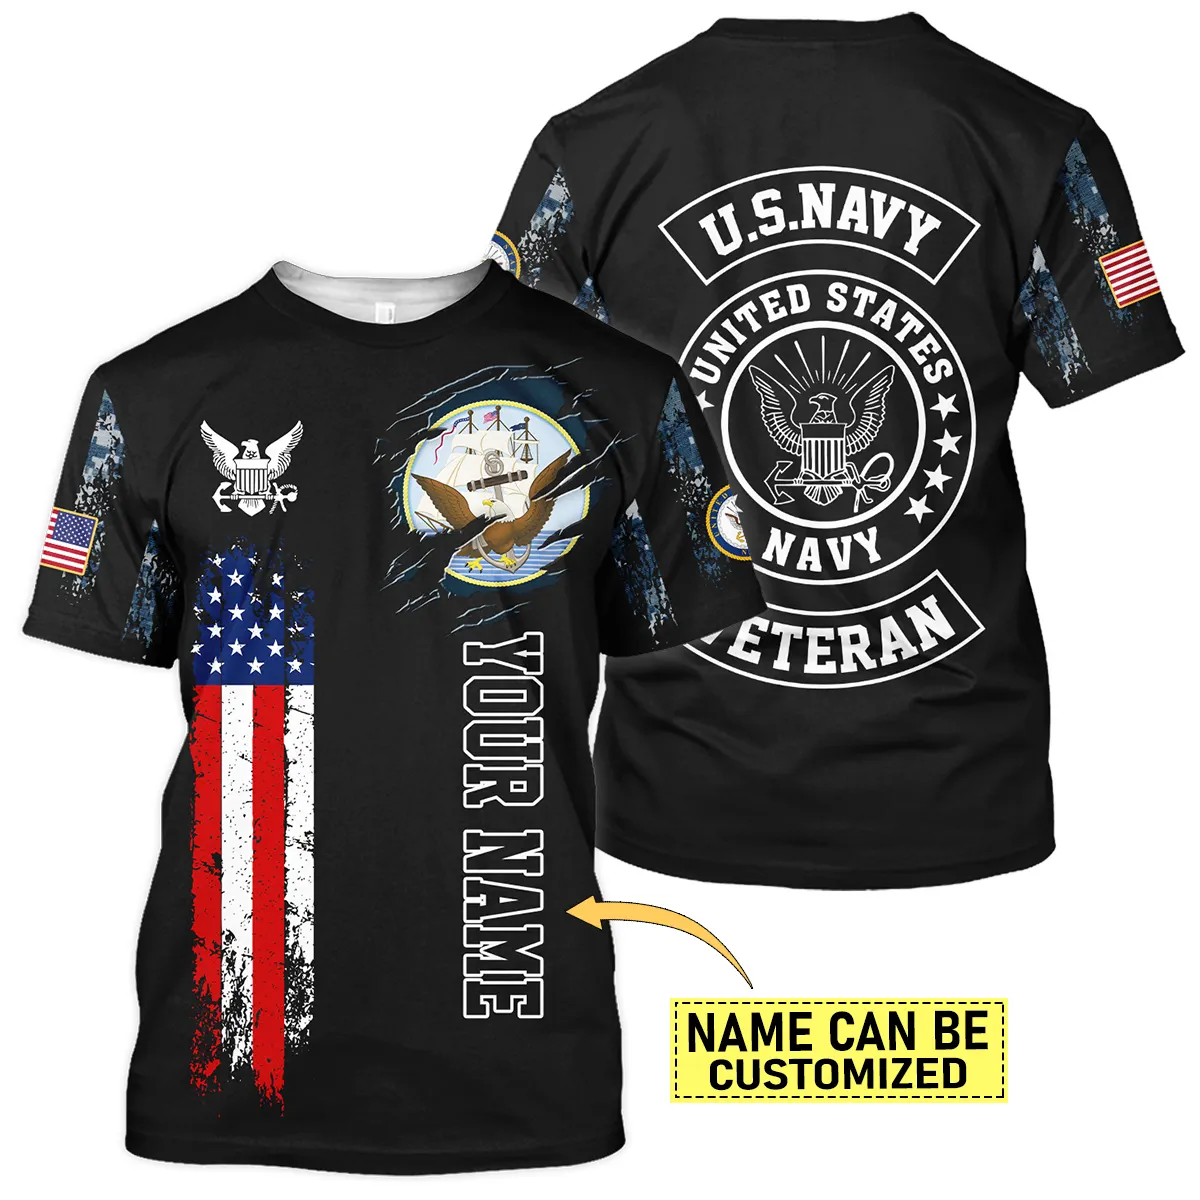 Flag Camo Pattern Custom Name U.S. Navy All Over Prints Unisex T-Shirt